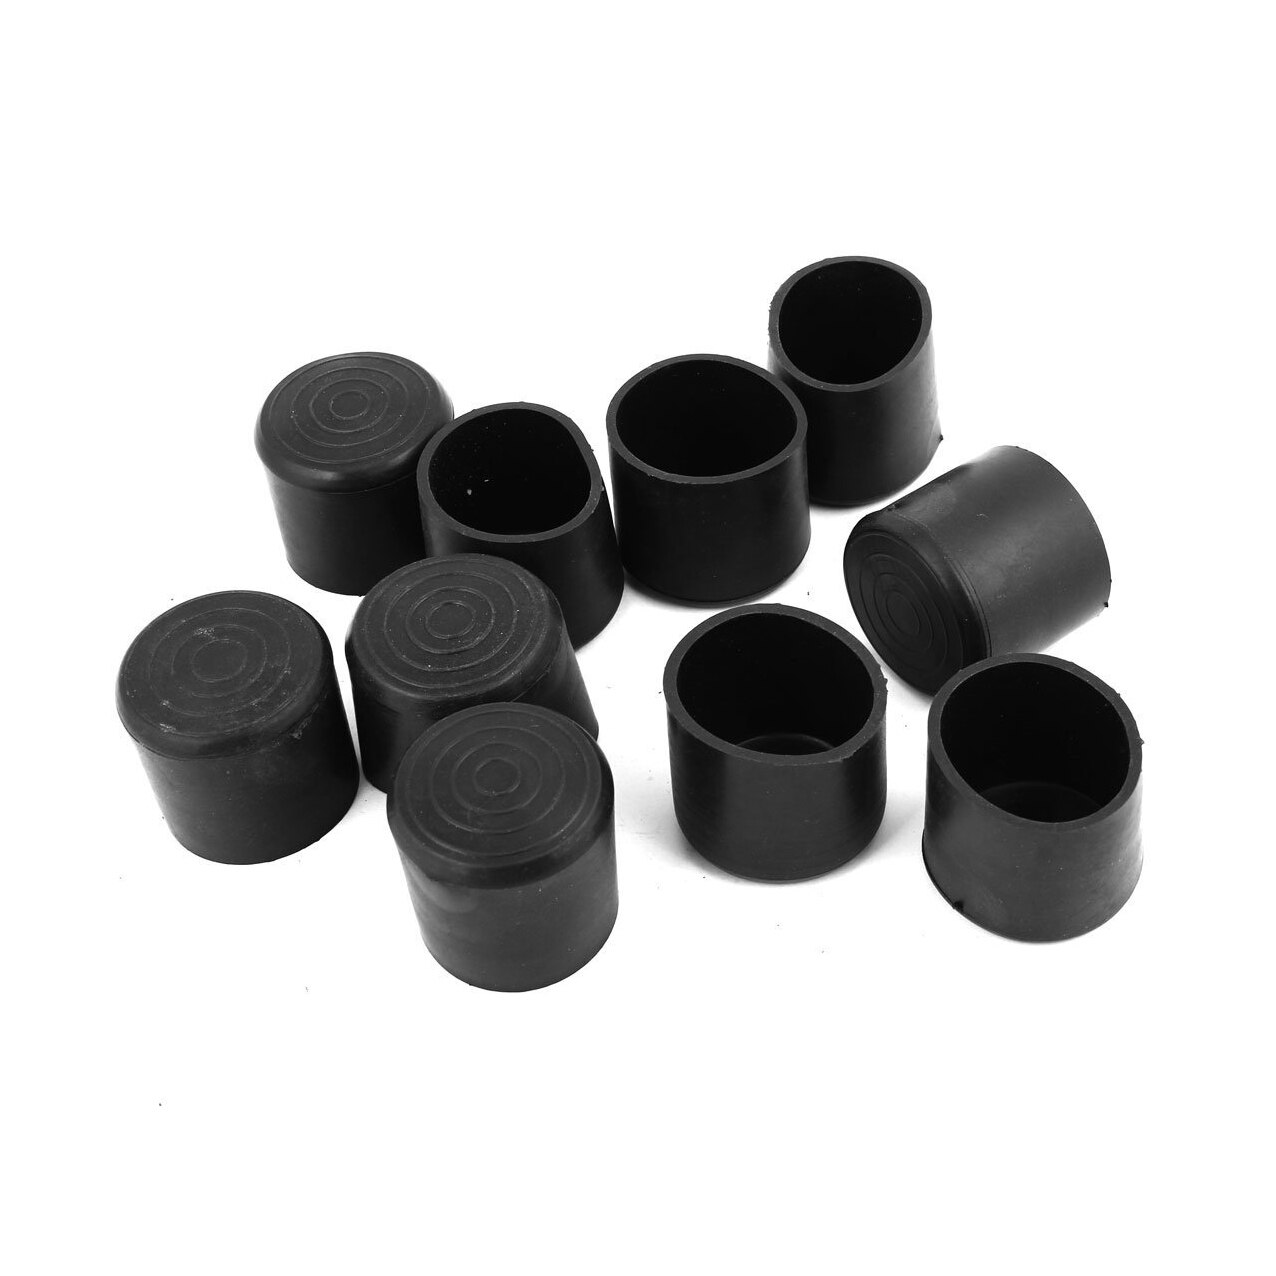  PVC  ձ   38MM  Ŀ 10 PC /Rubber PVC Flexible Round End Cap 38MM Foot Cover 10 Pcs Black